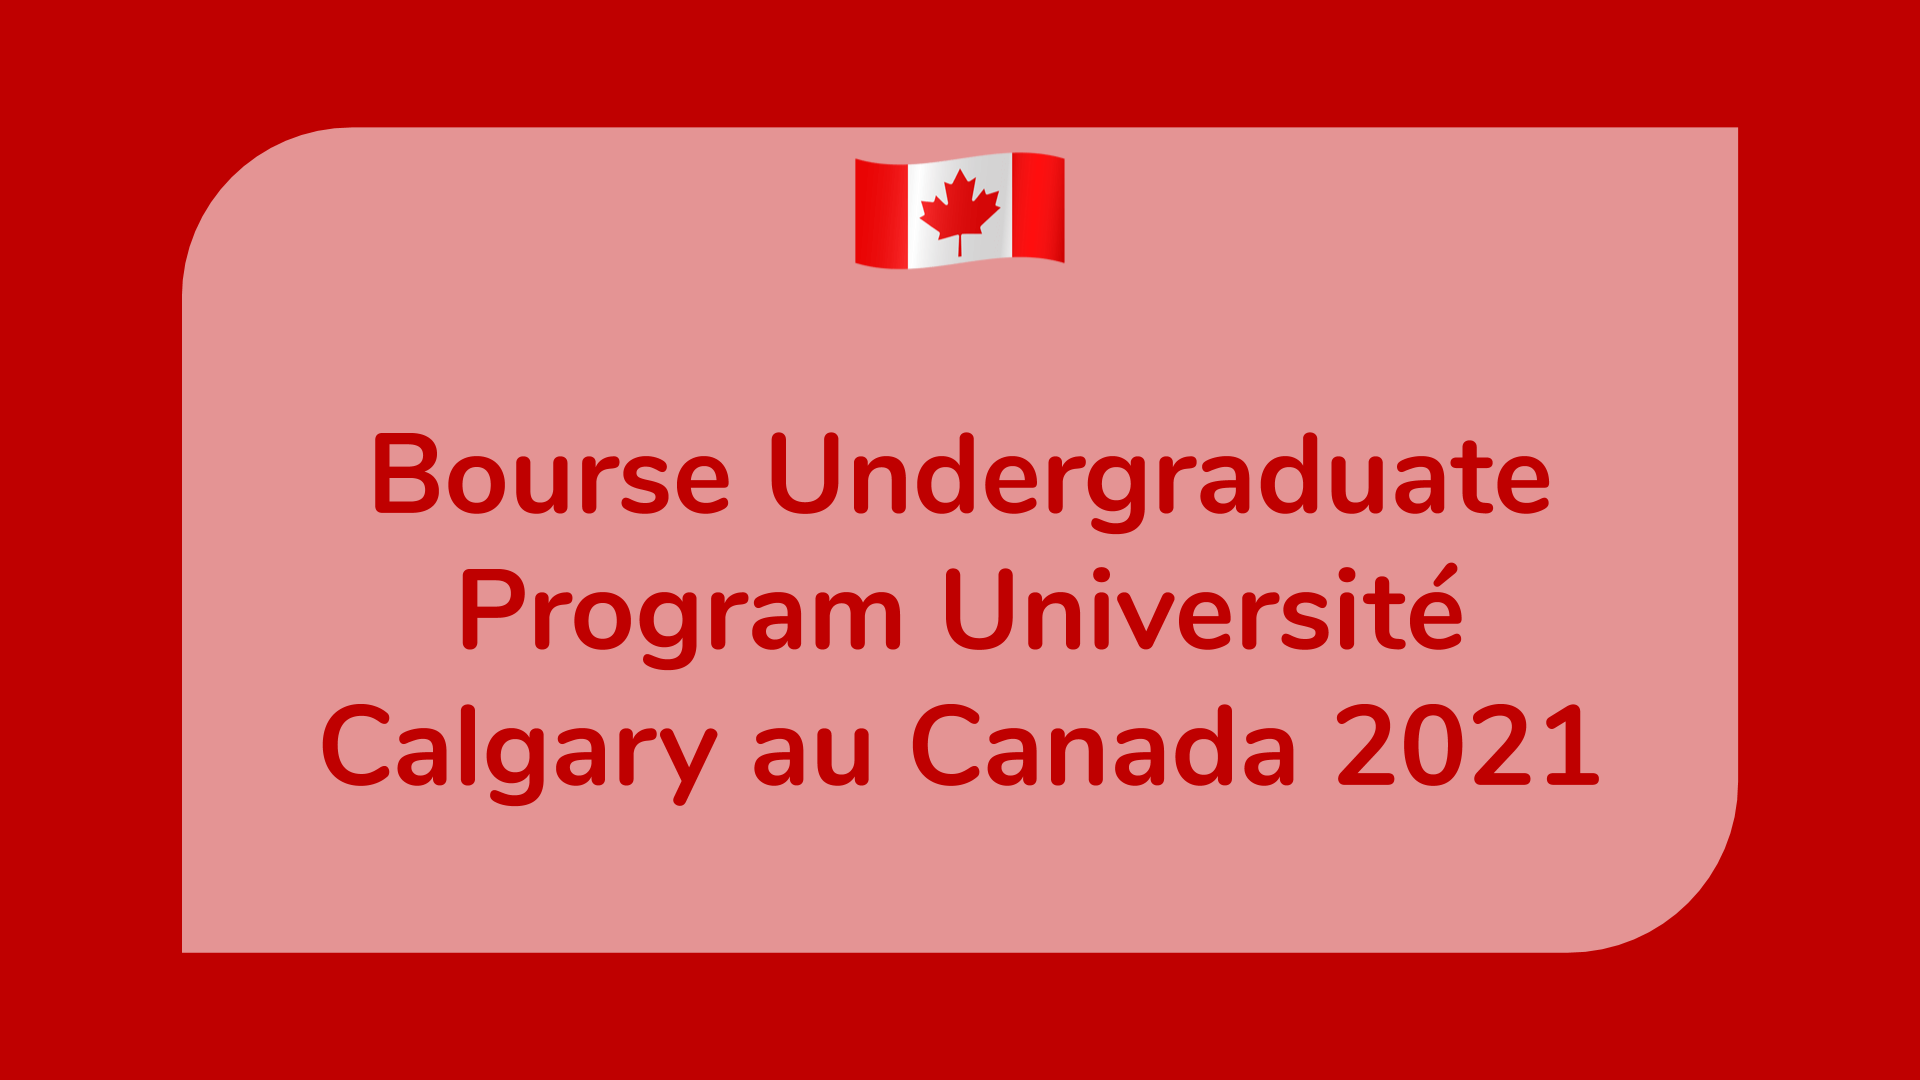 bourse undergraduate program universite calgary au canada 2021